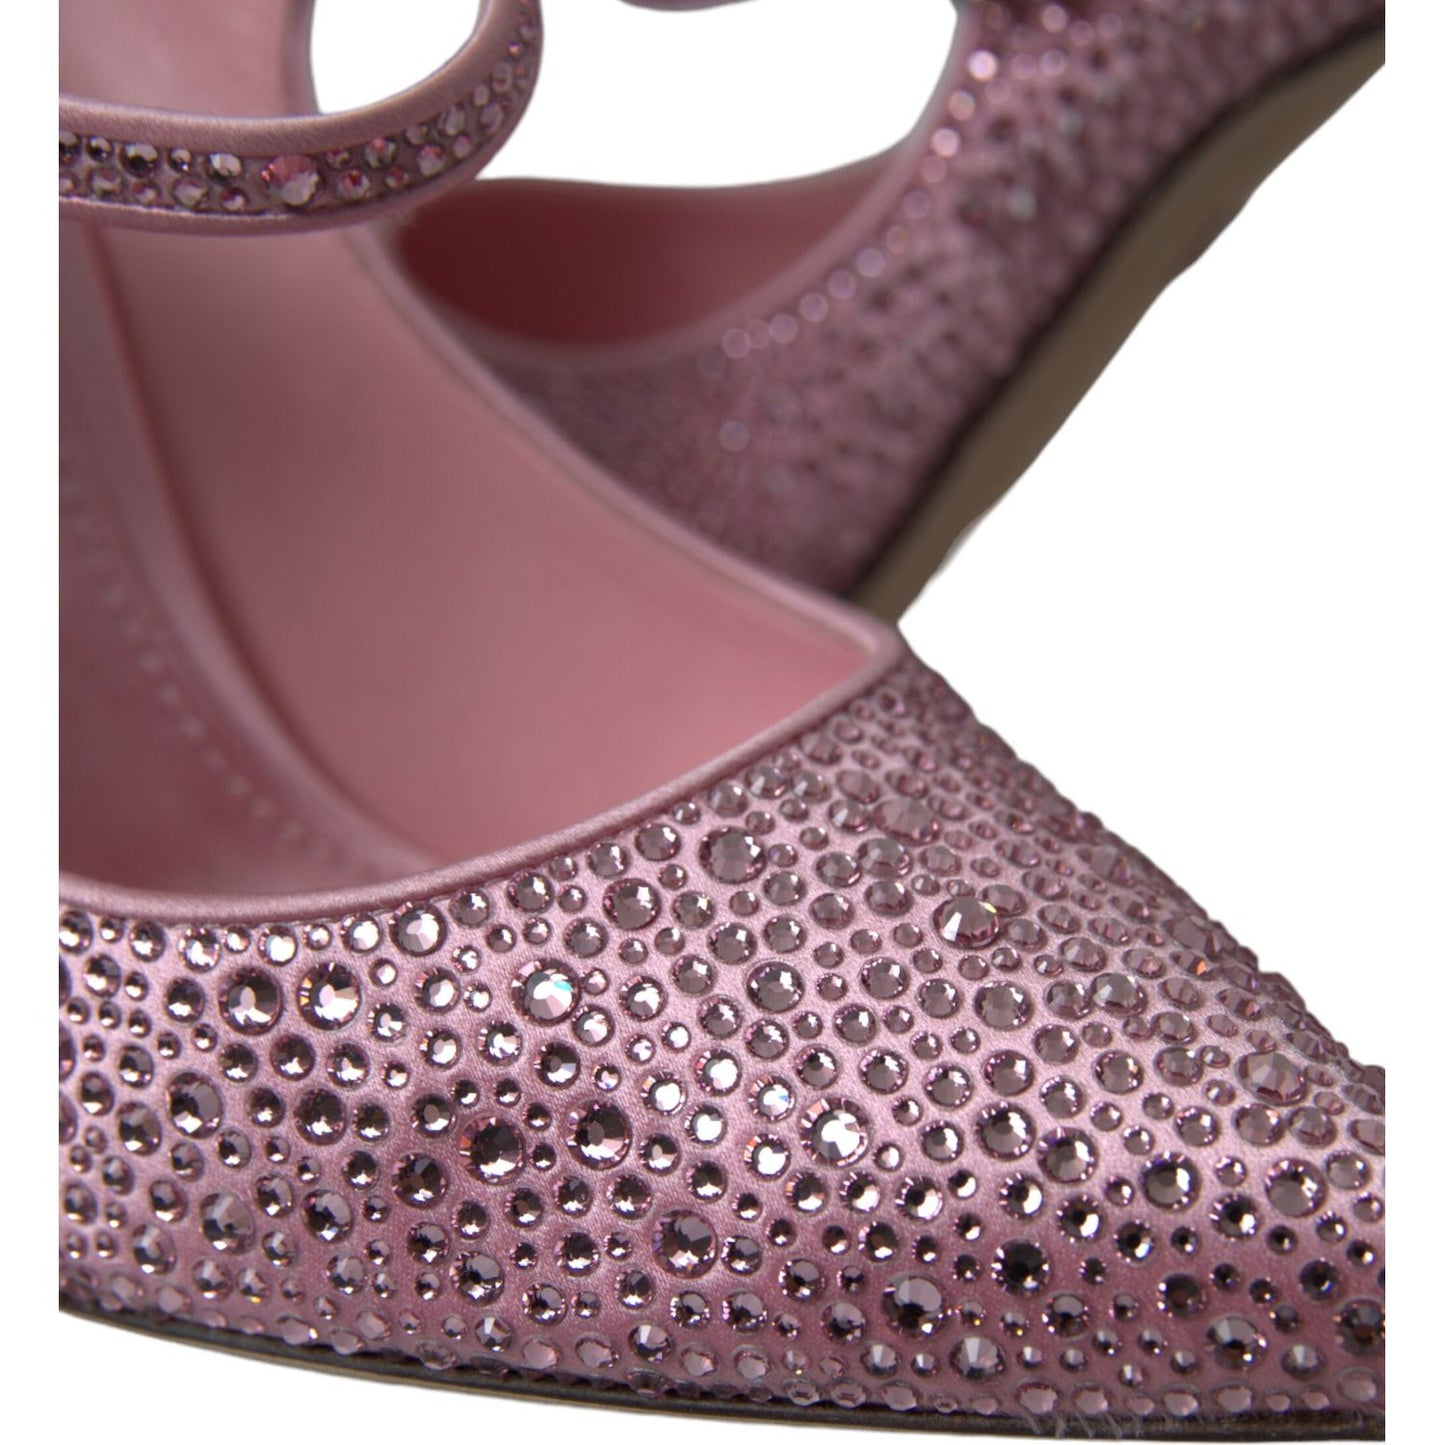 Dolce & Gabbana Enchanting Pink Crystal Pumps pink-strass-crystal-heels-pumps-shoes 465A9315-bg-scaled-593bce08-9a0.jpg